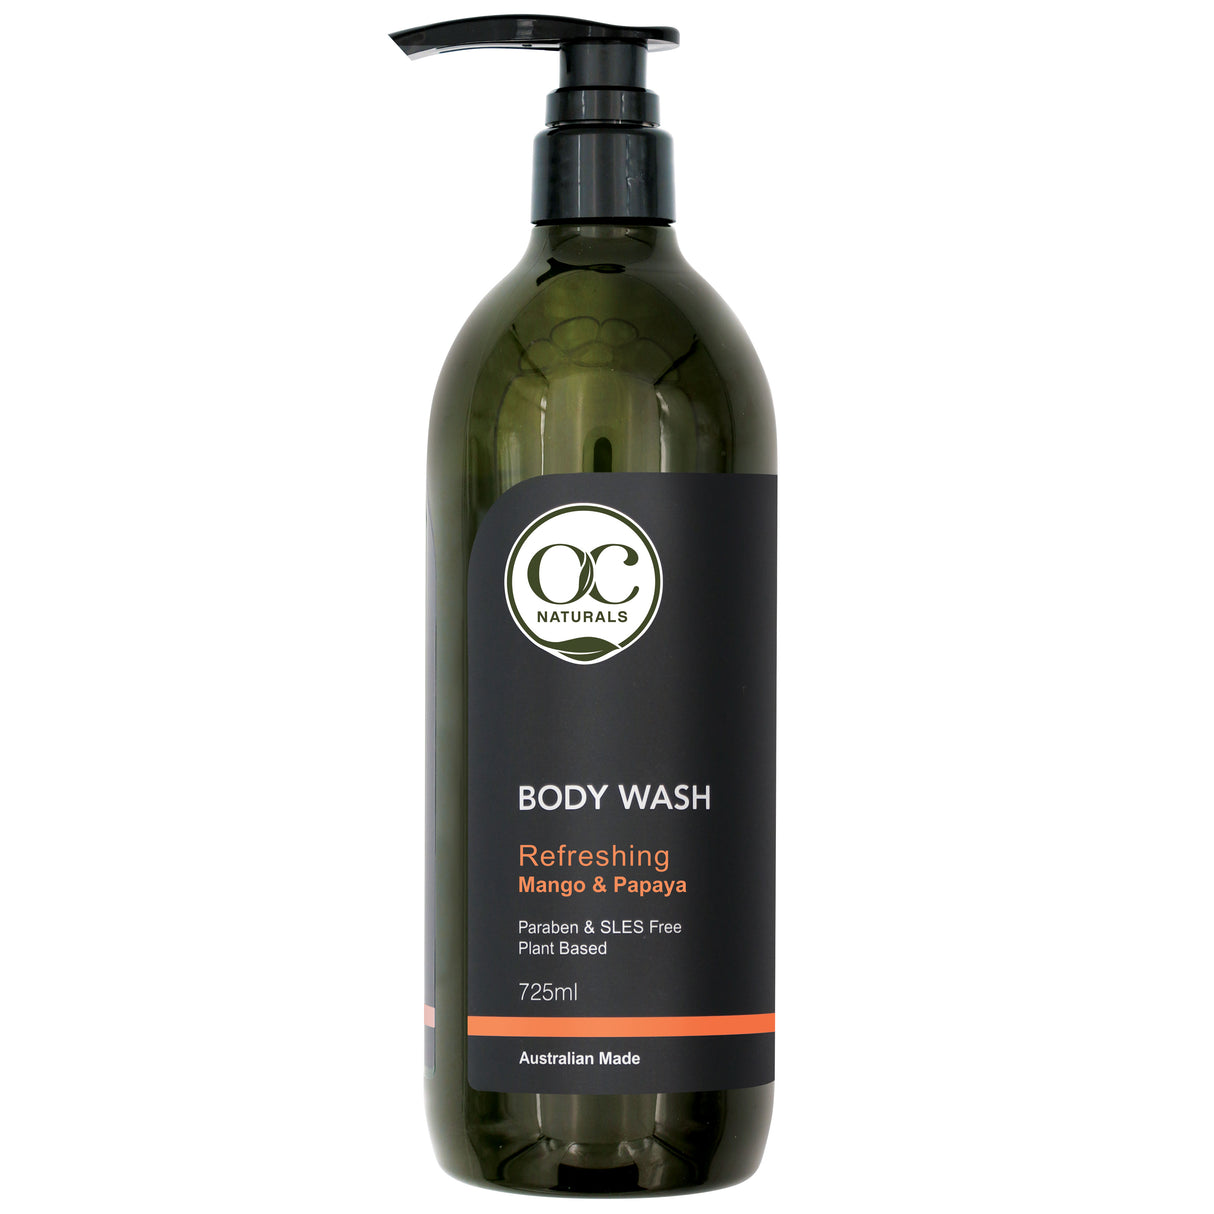 OC Naturals Mango & Papaya Refreshing Body Wash 725ml